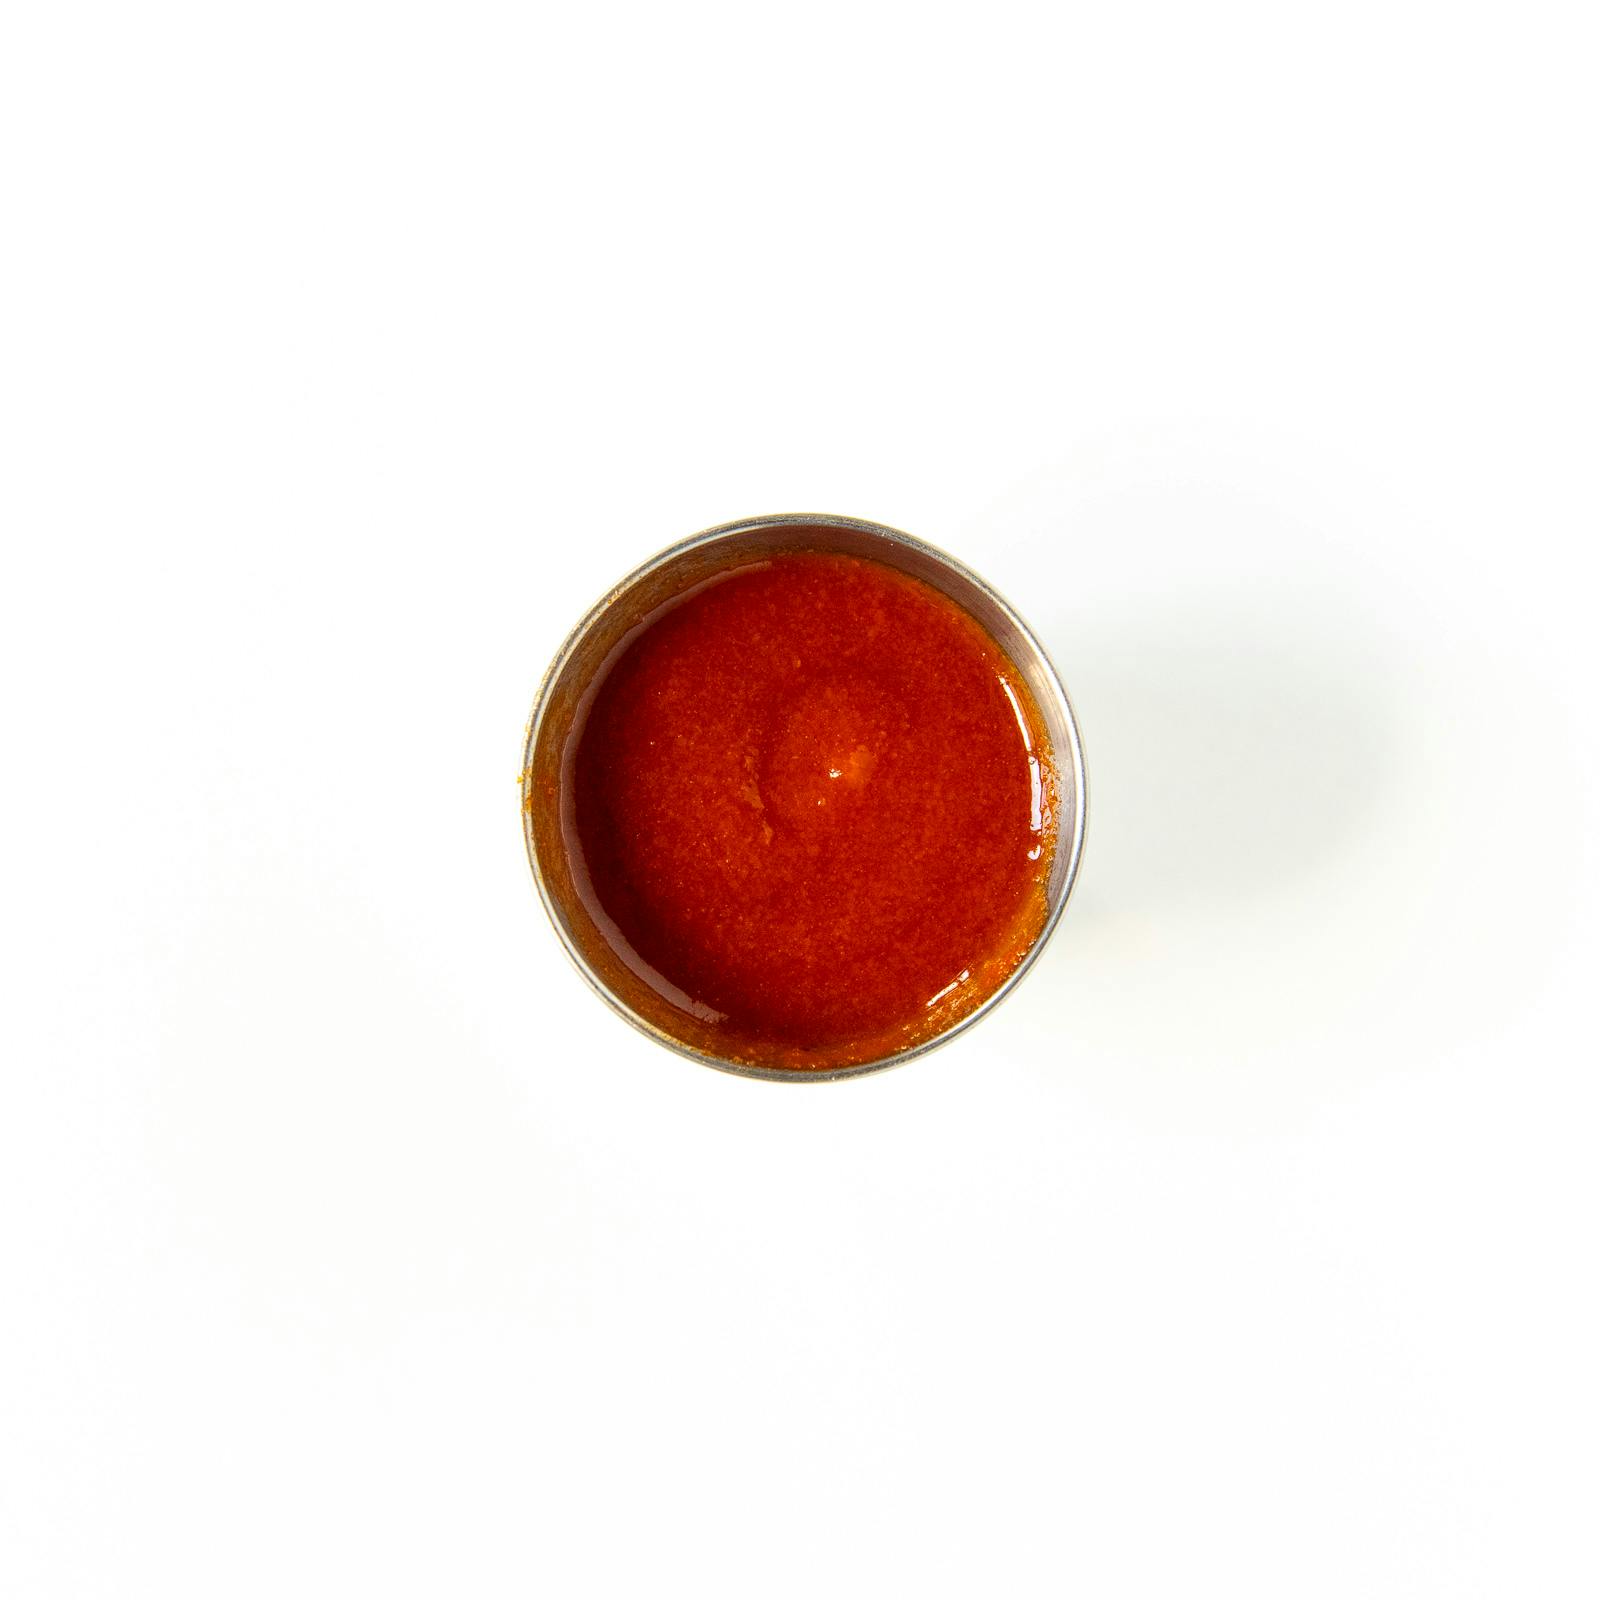 Honey Garlic Sriracha Sauce from Midcoast Wings - Glendale Ave in Green Bay, WI